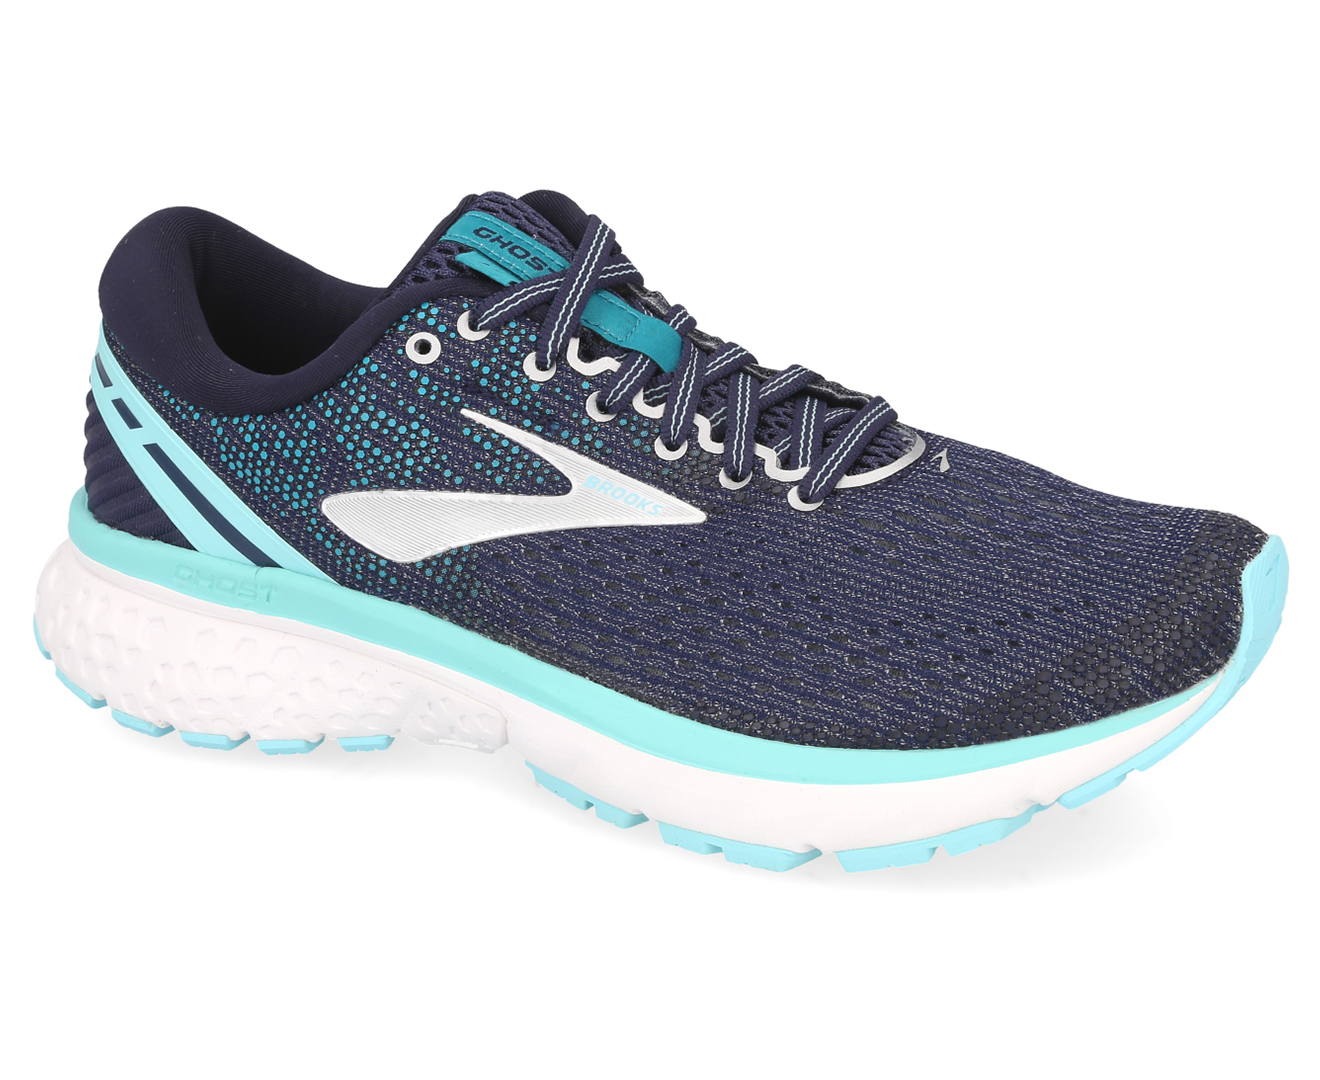 Brooks Women's Ghost 11 Running Shoes - Navy/Grey/Blue | Catch.com.au